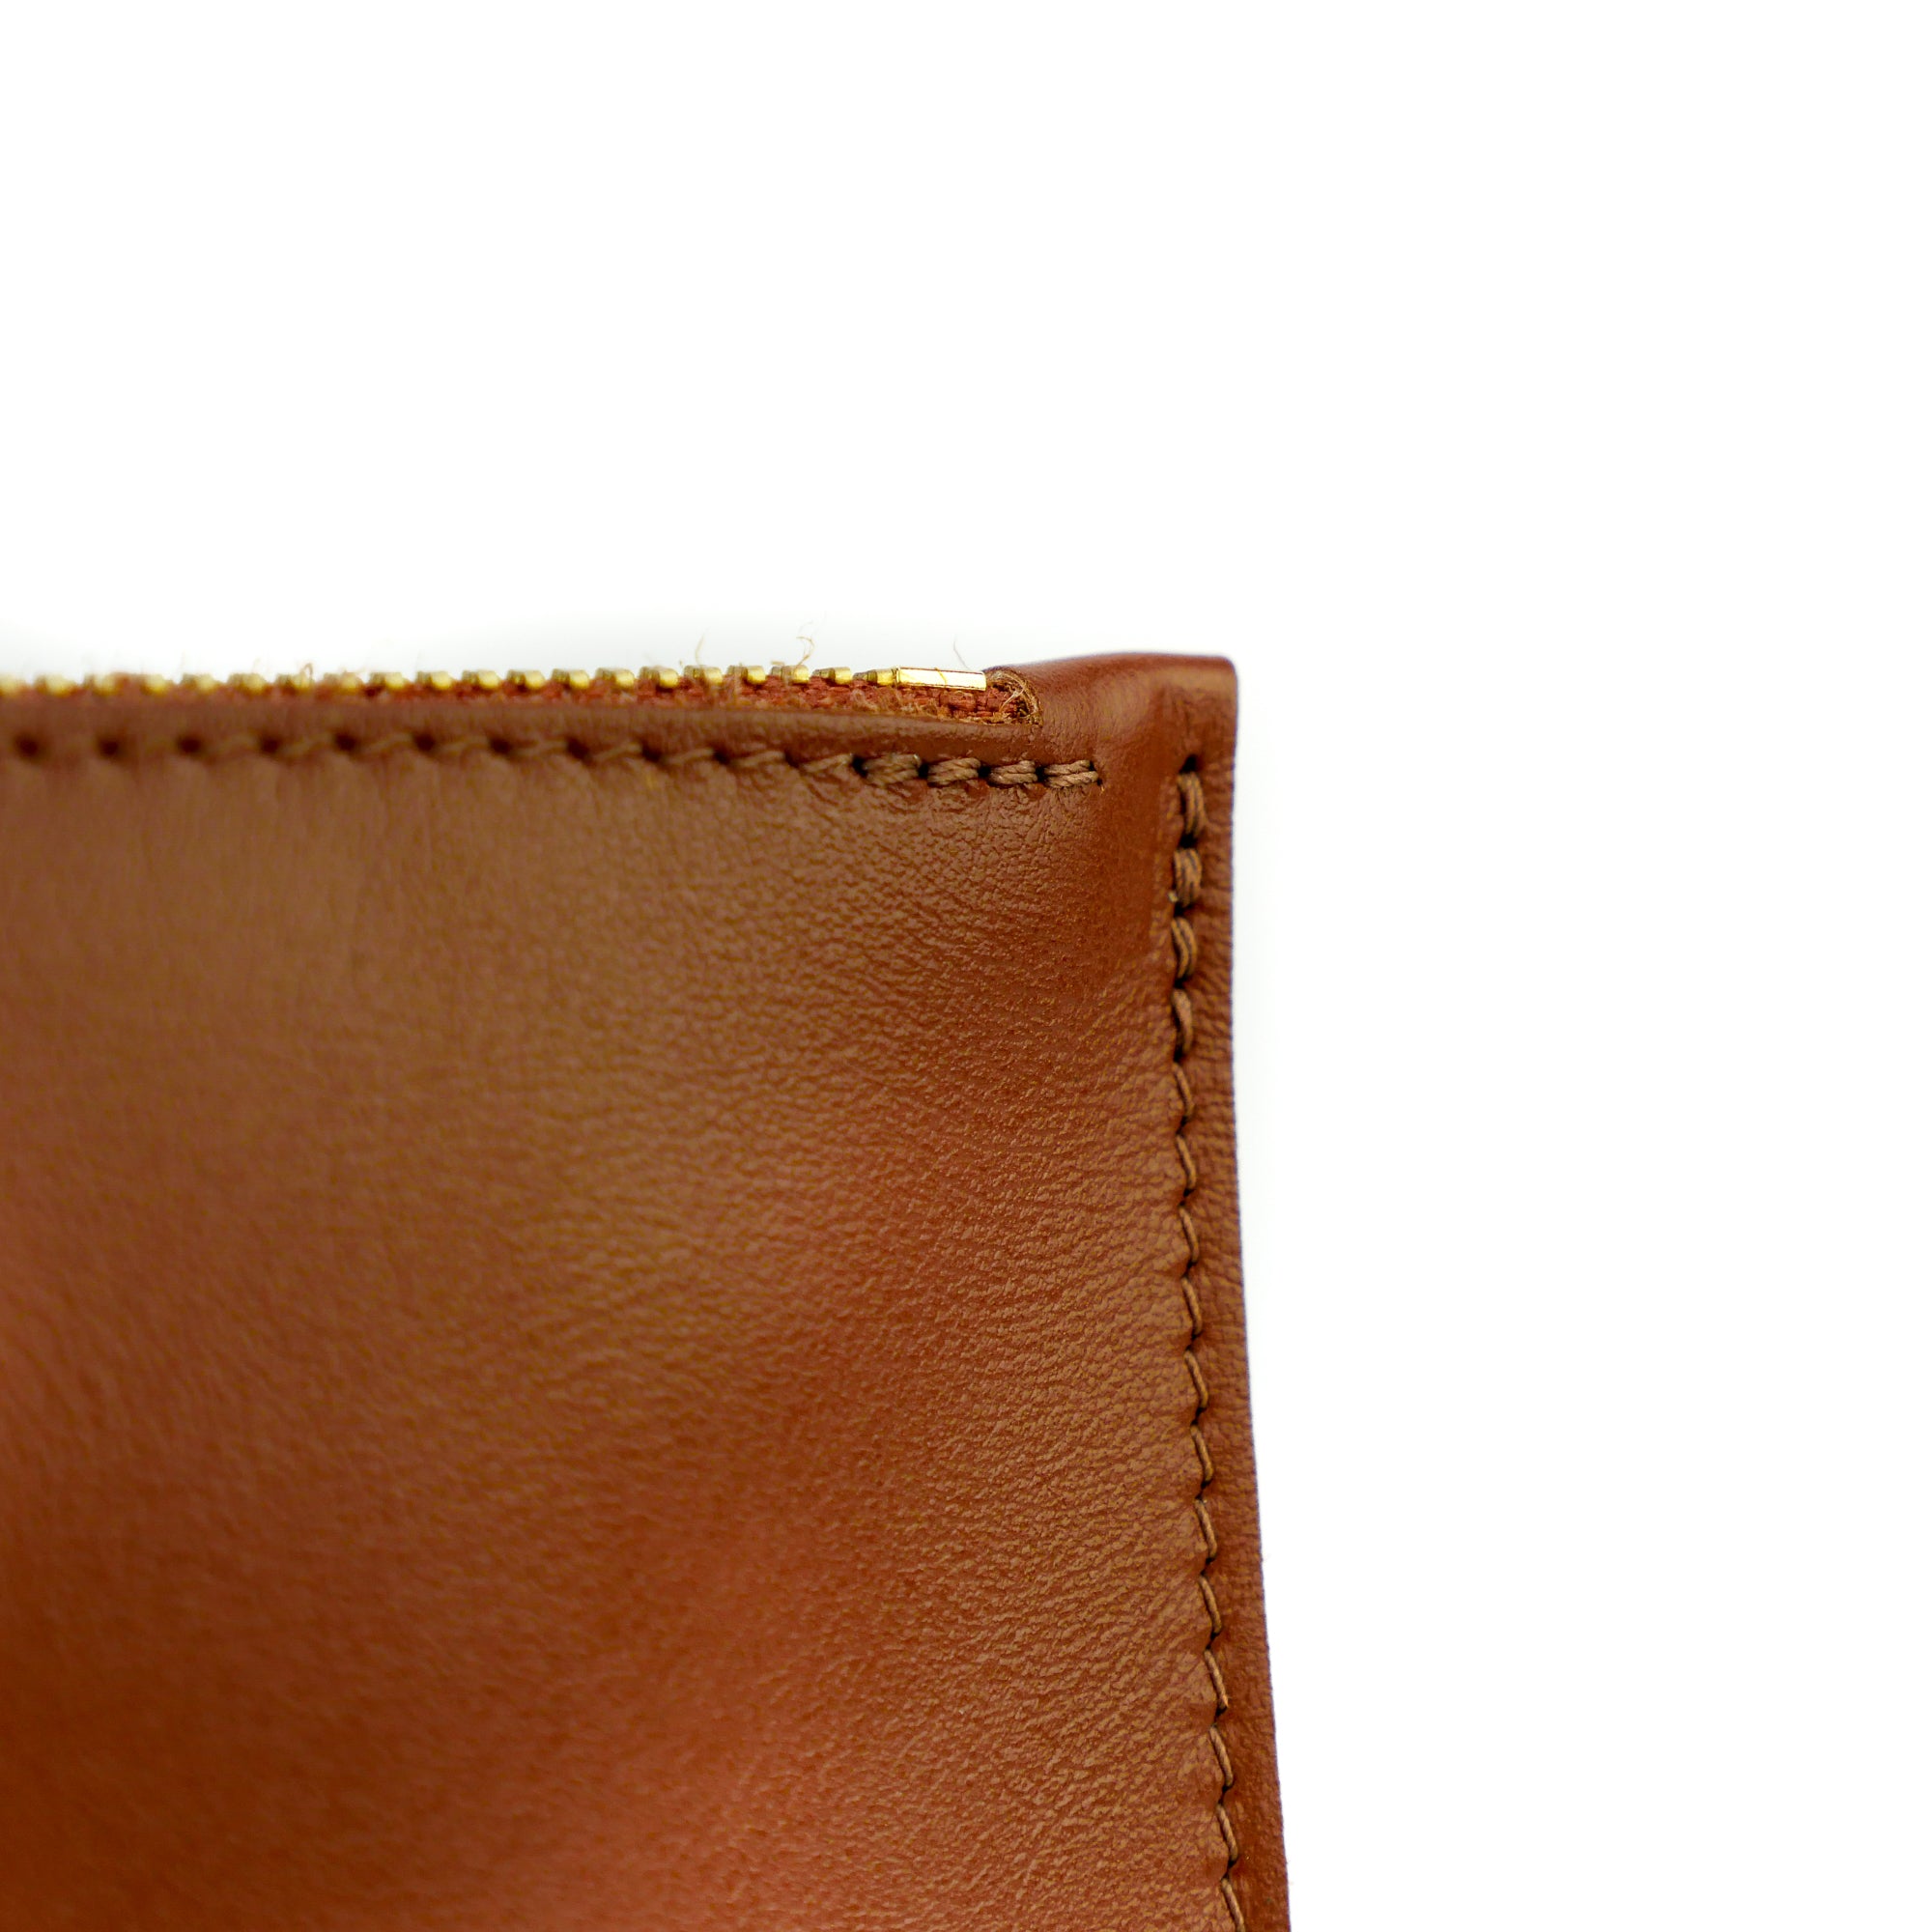 Tan Leather Clutch Bag - Roam